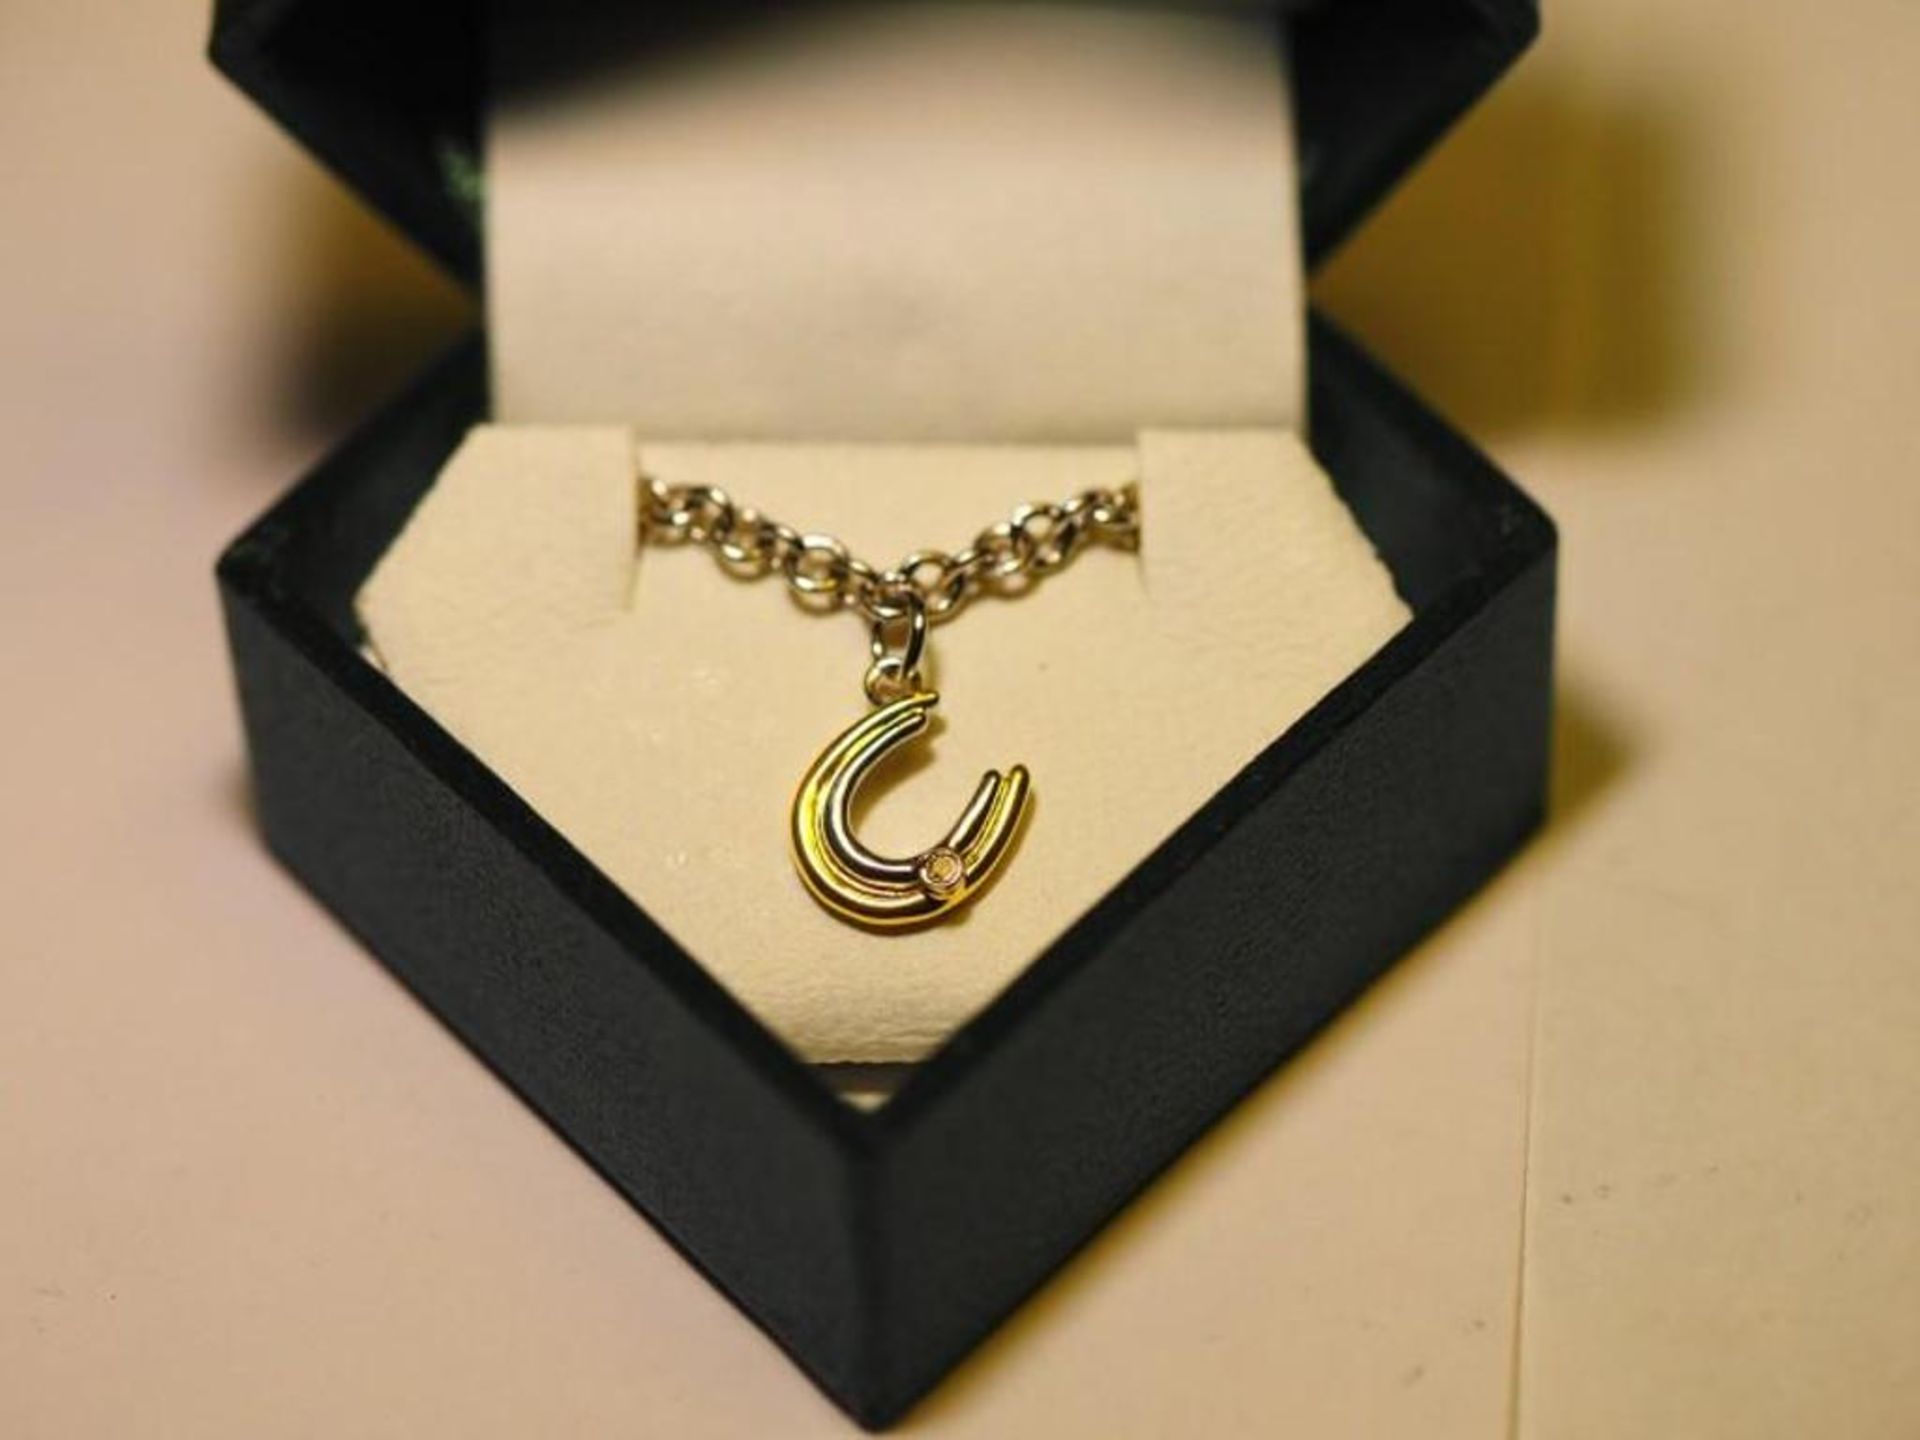 Stering Silver Rhoduim Plated Diamond Bracelet, Retail $150